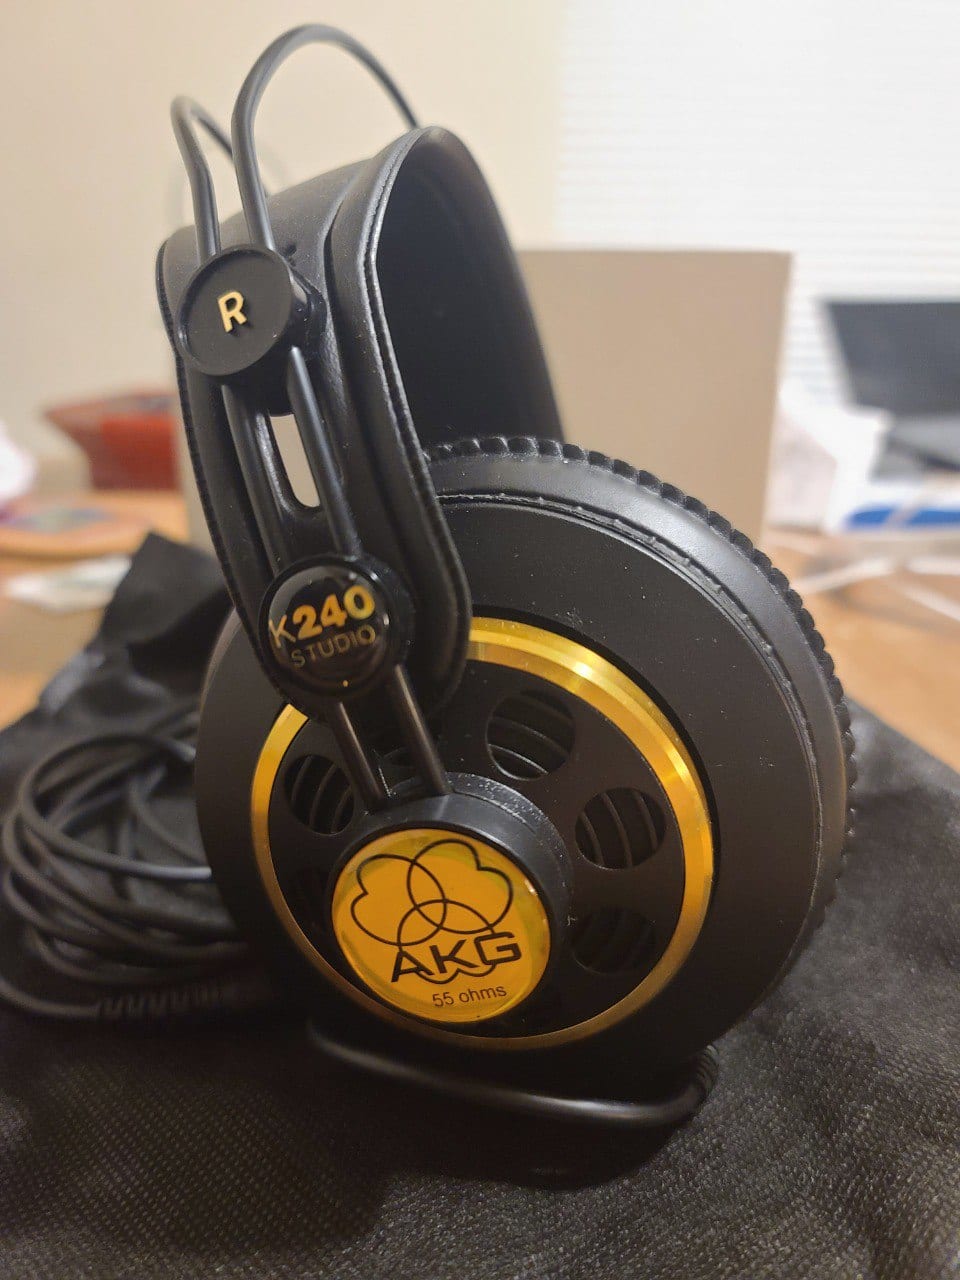 Used, Like New) AKG K240 Studio Reference Headphones on Jawa